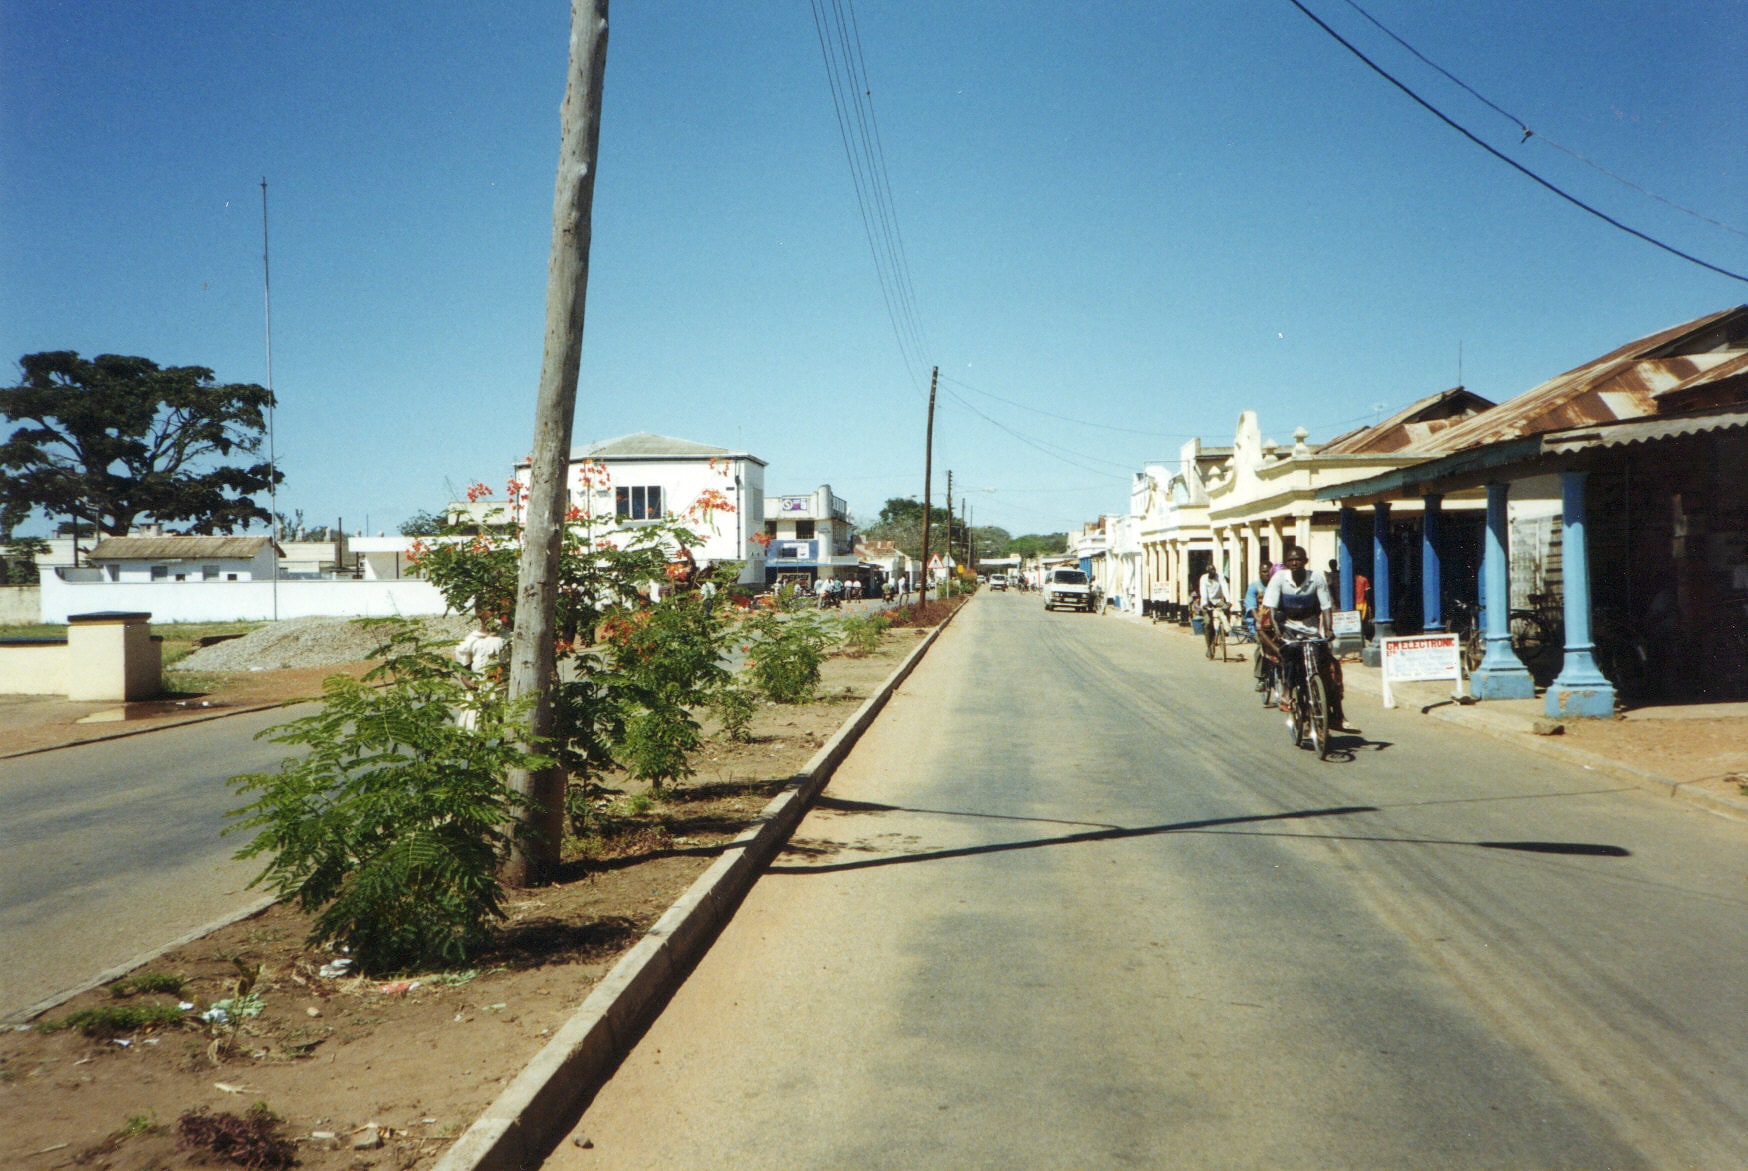 Soroti, Uganda